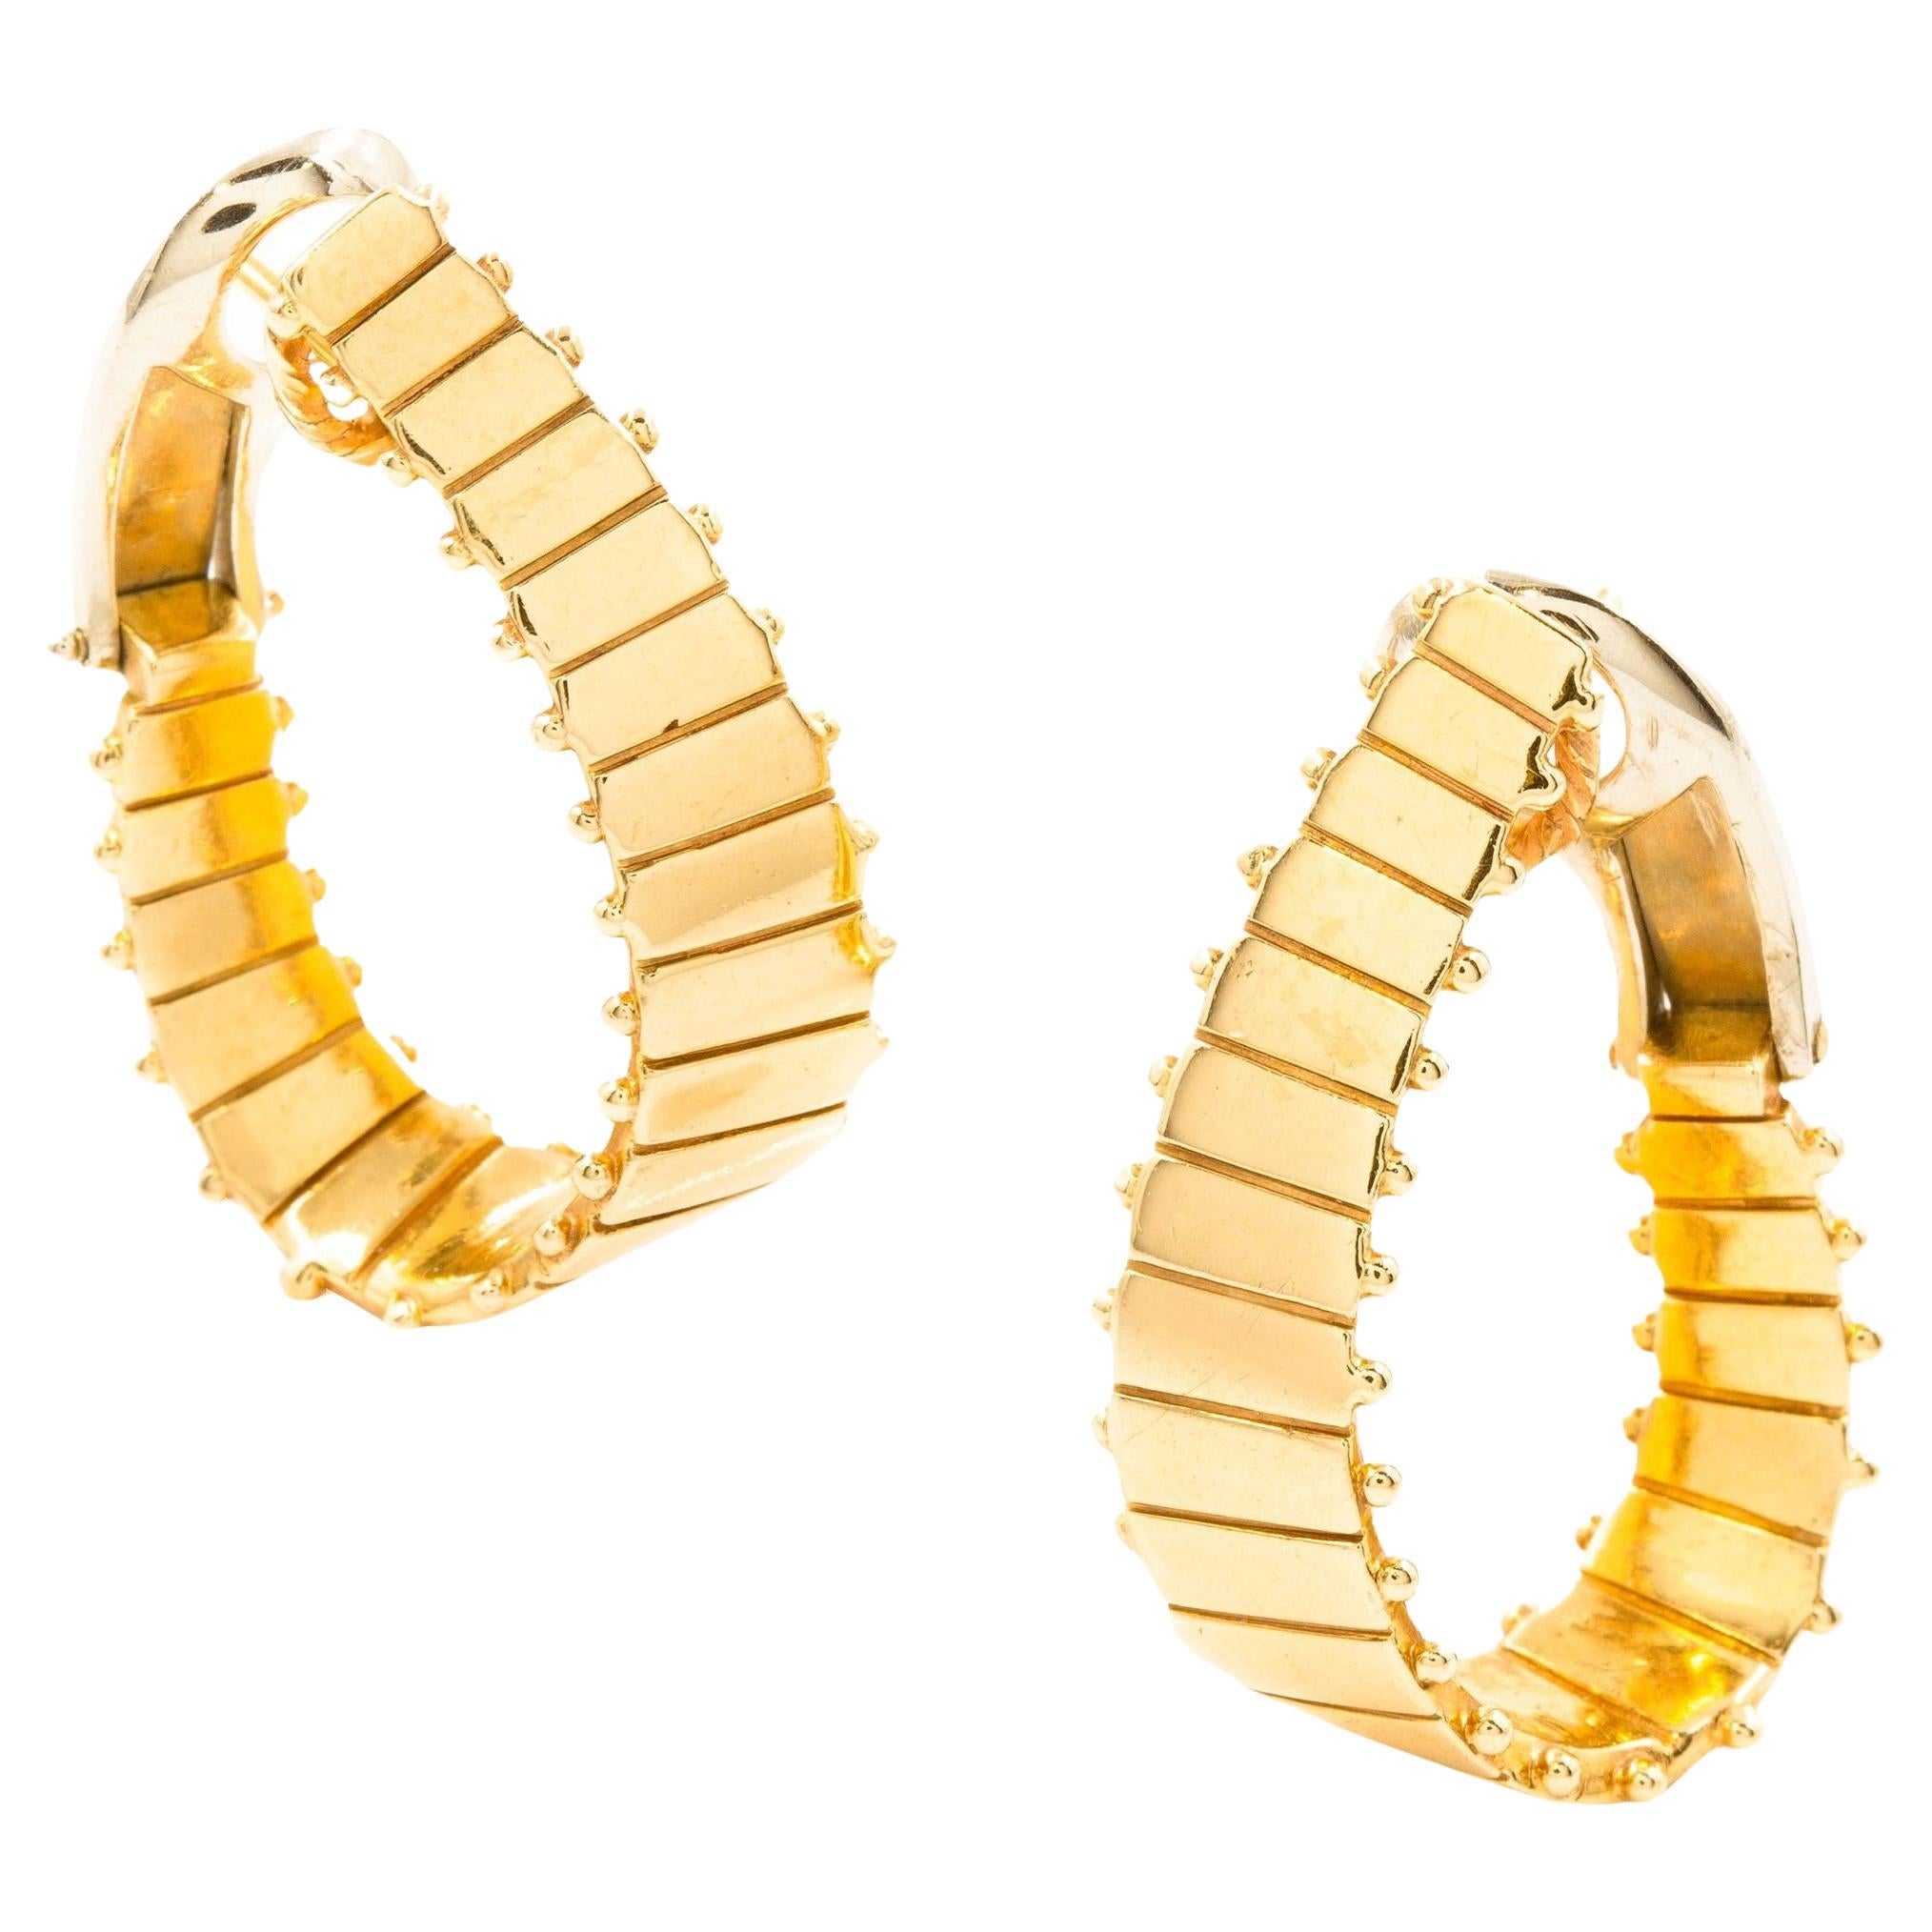 Paar Vintage-Ohrringe mit Ridged-Hoop aus 14k Gelbgold mit Omega-Clips